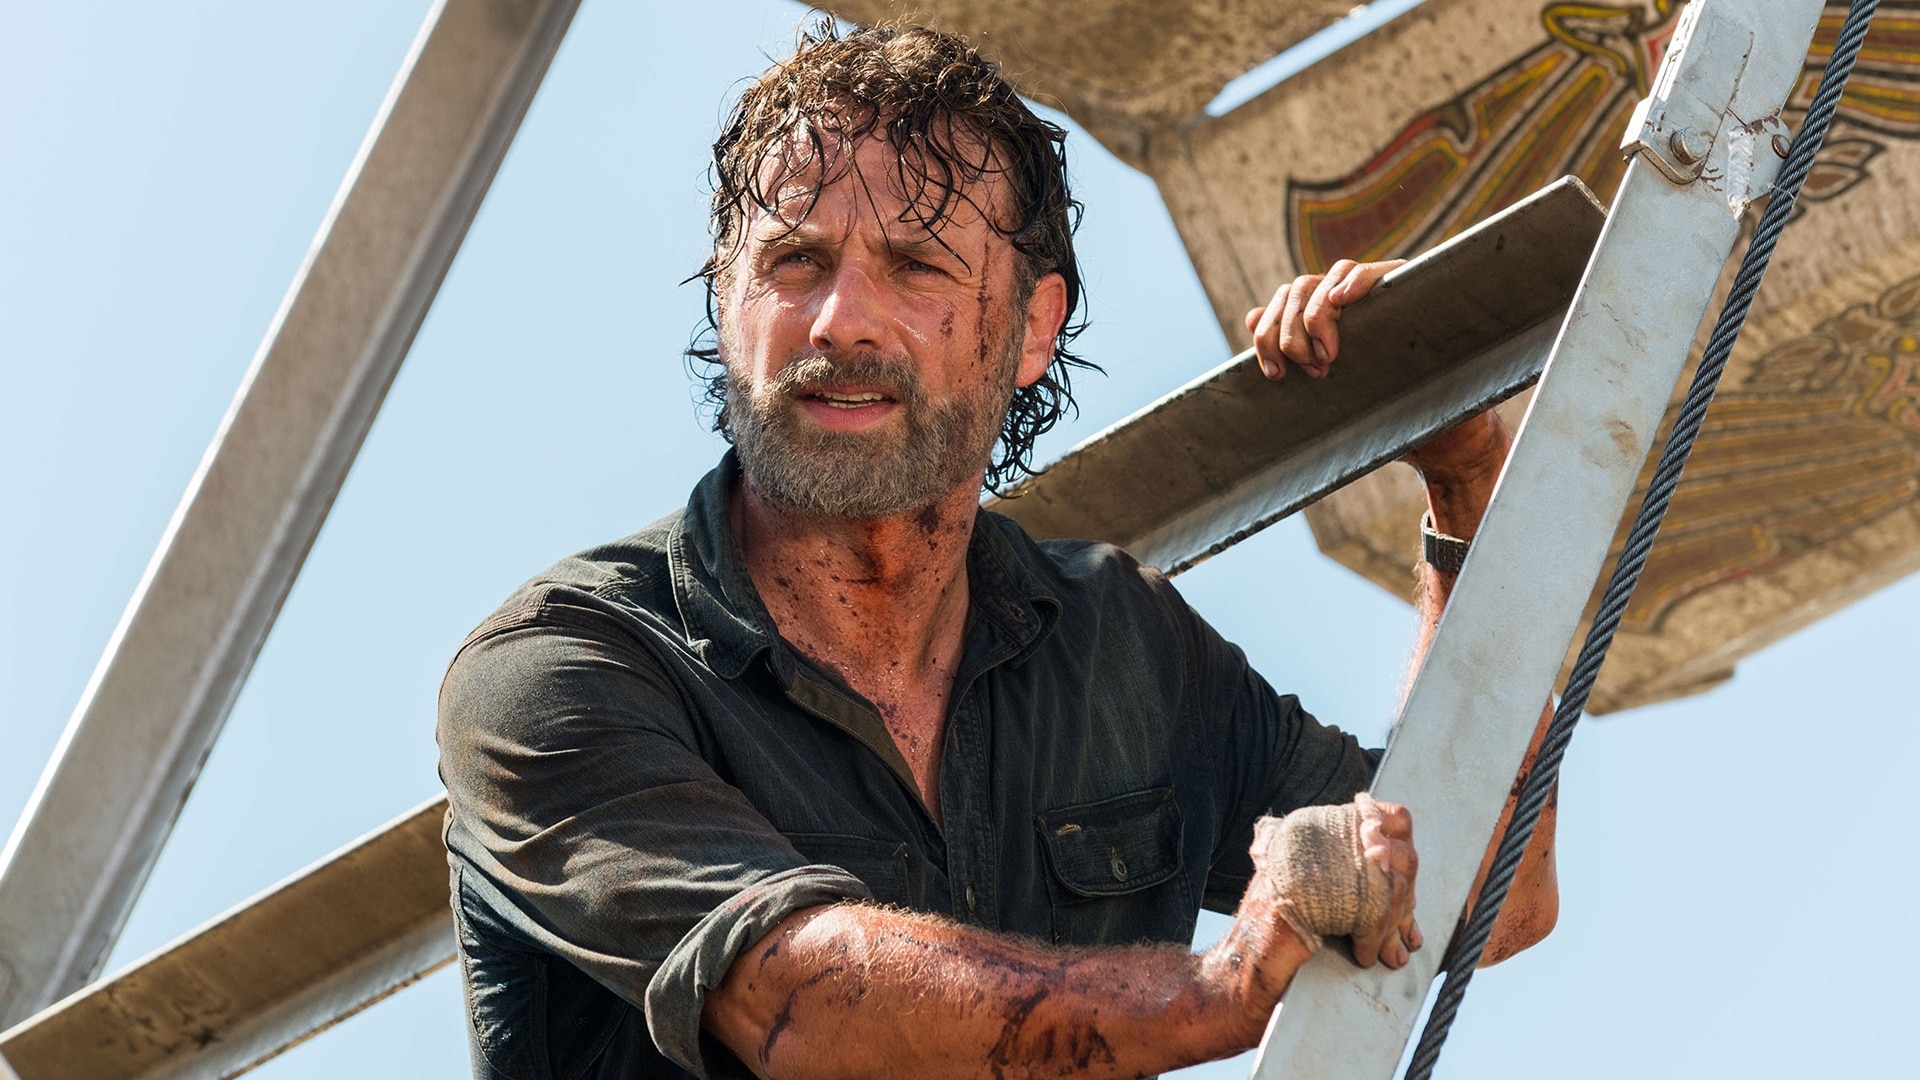 ‘The Walking Dead’ Film Starring Andrew Lincoln Under Development